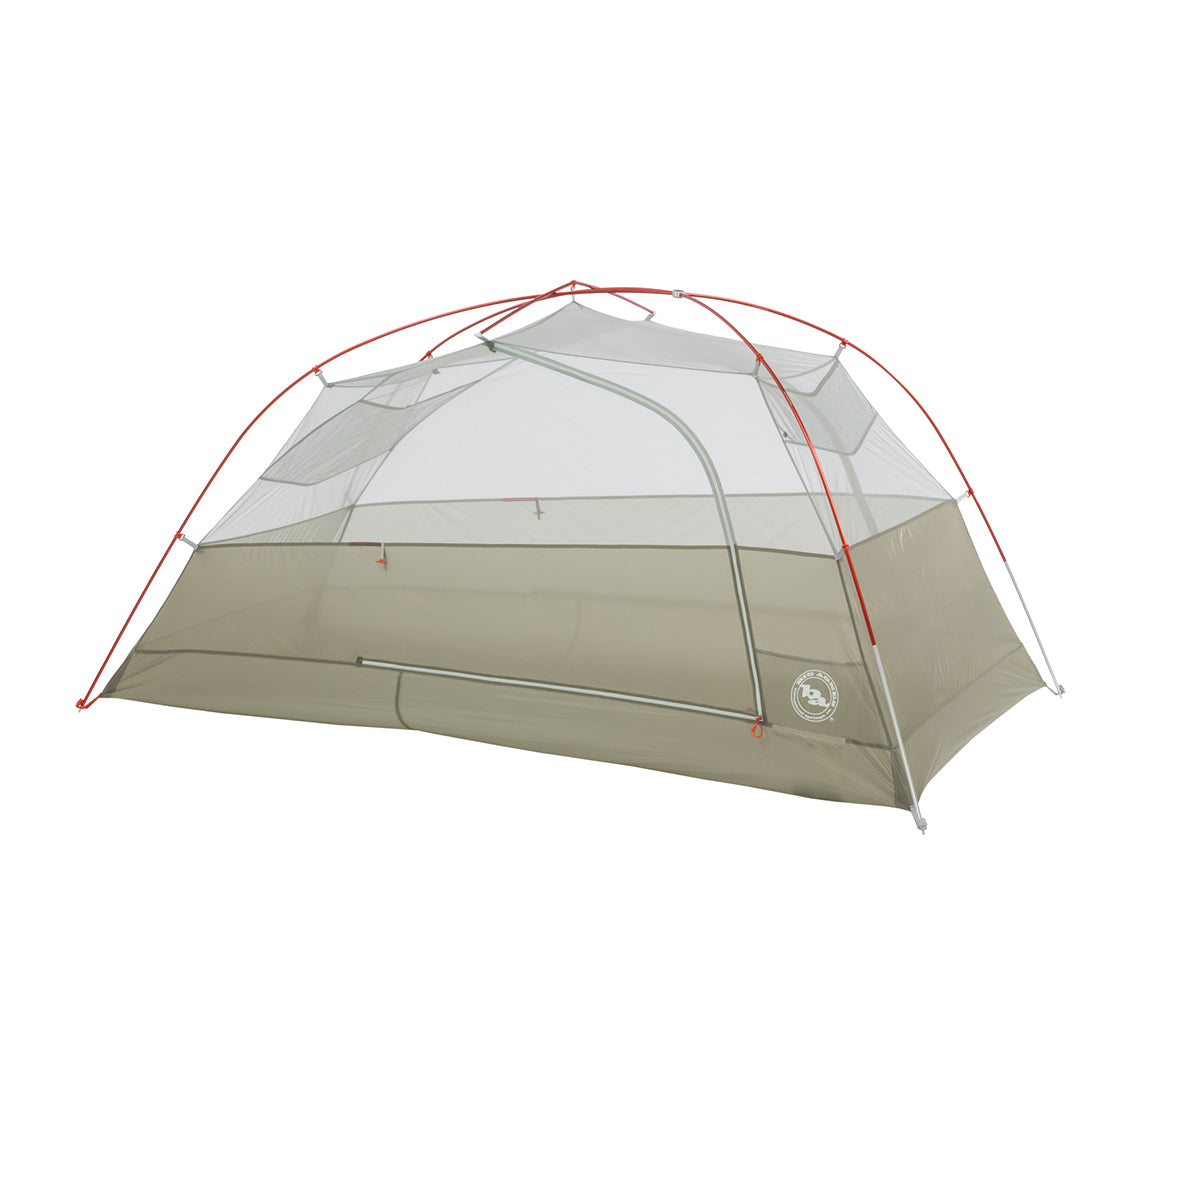 Big Agnes Copper Spur HV UL 2 Person Tent by Big Agnes | Camping - goHUNT Shop